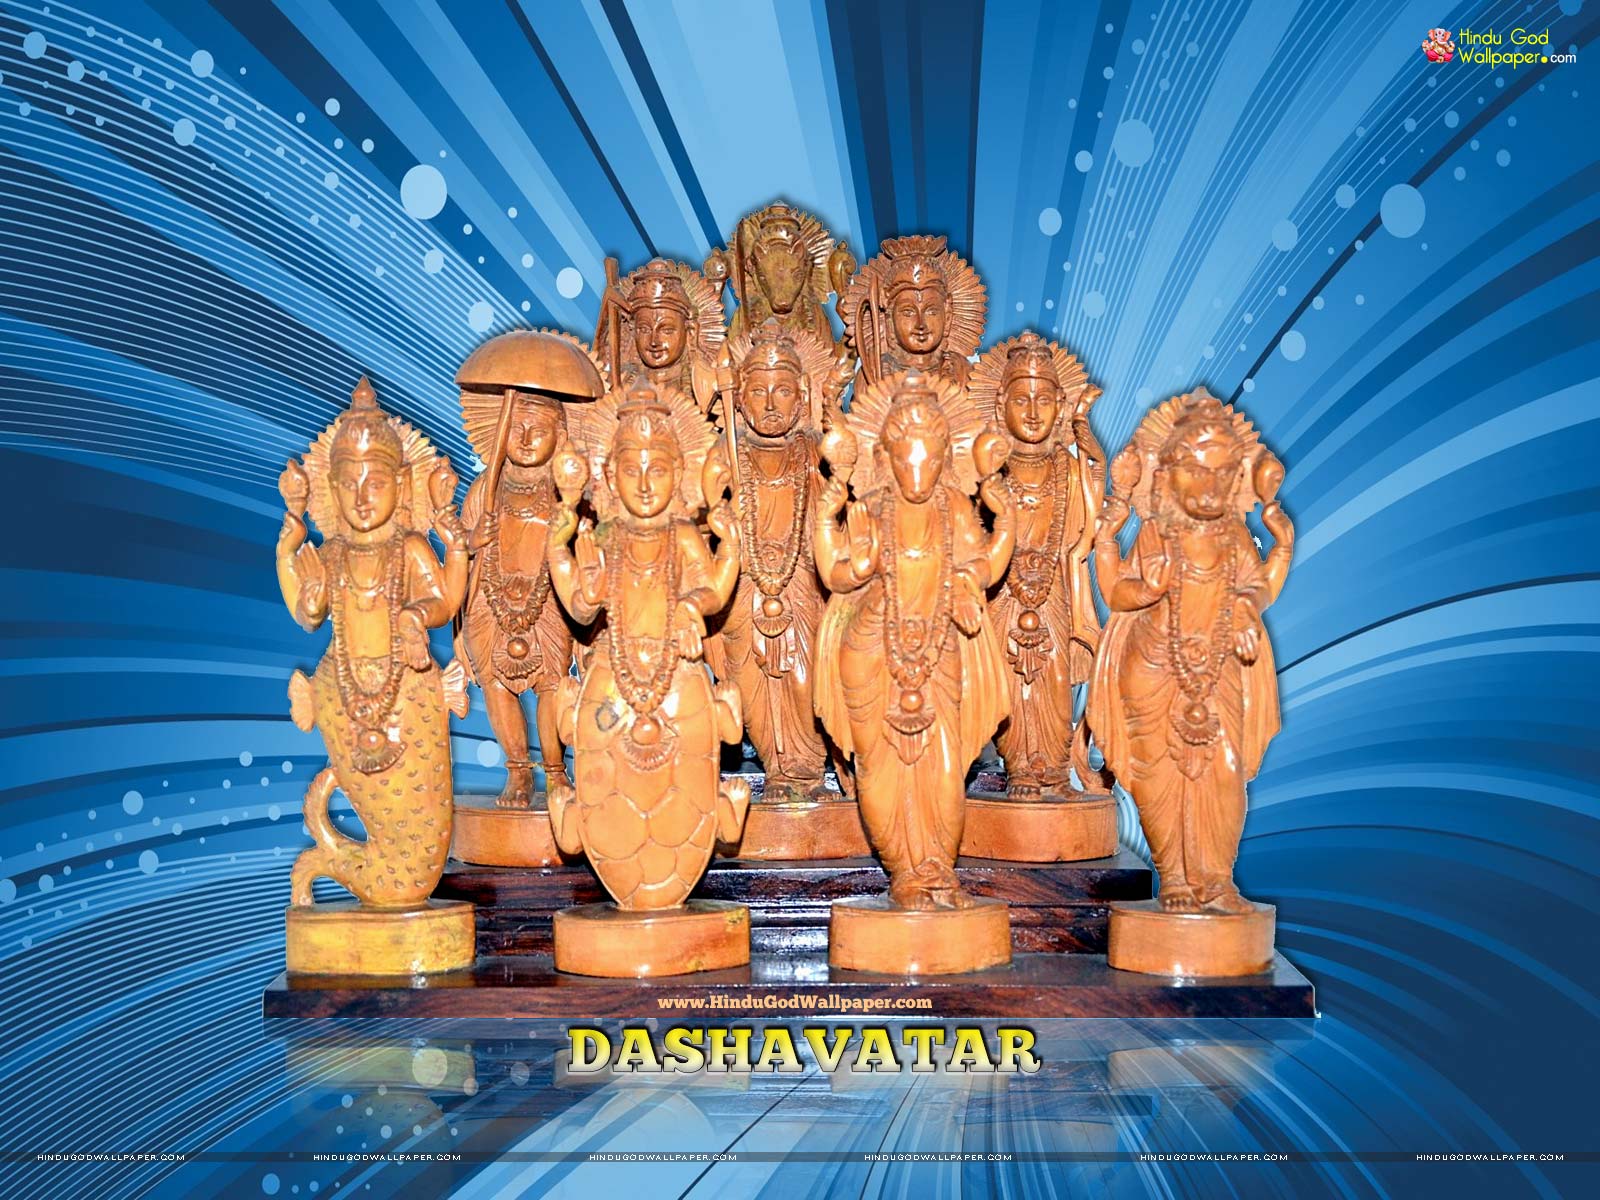 Dashavatar Statues